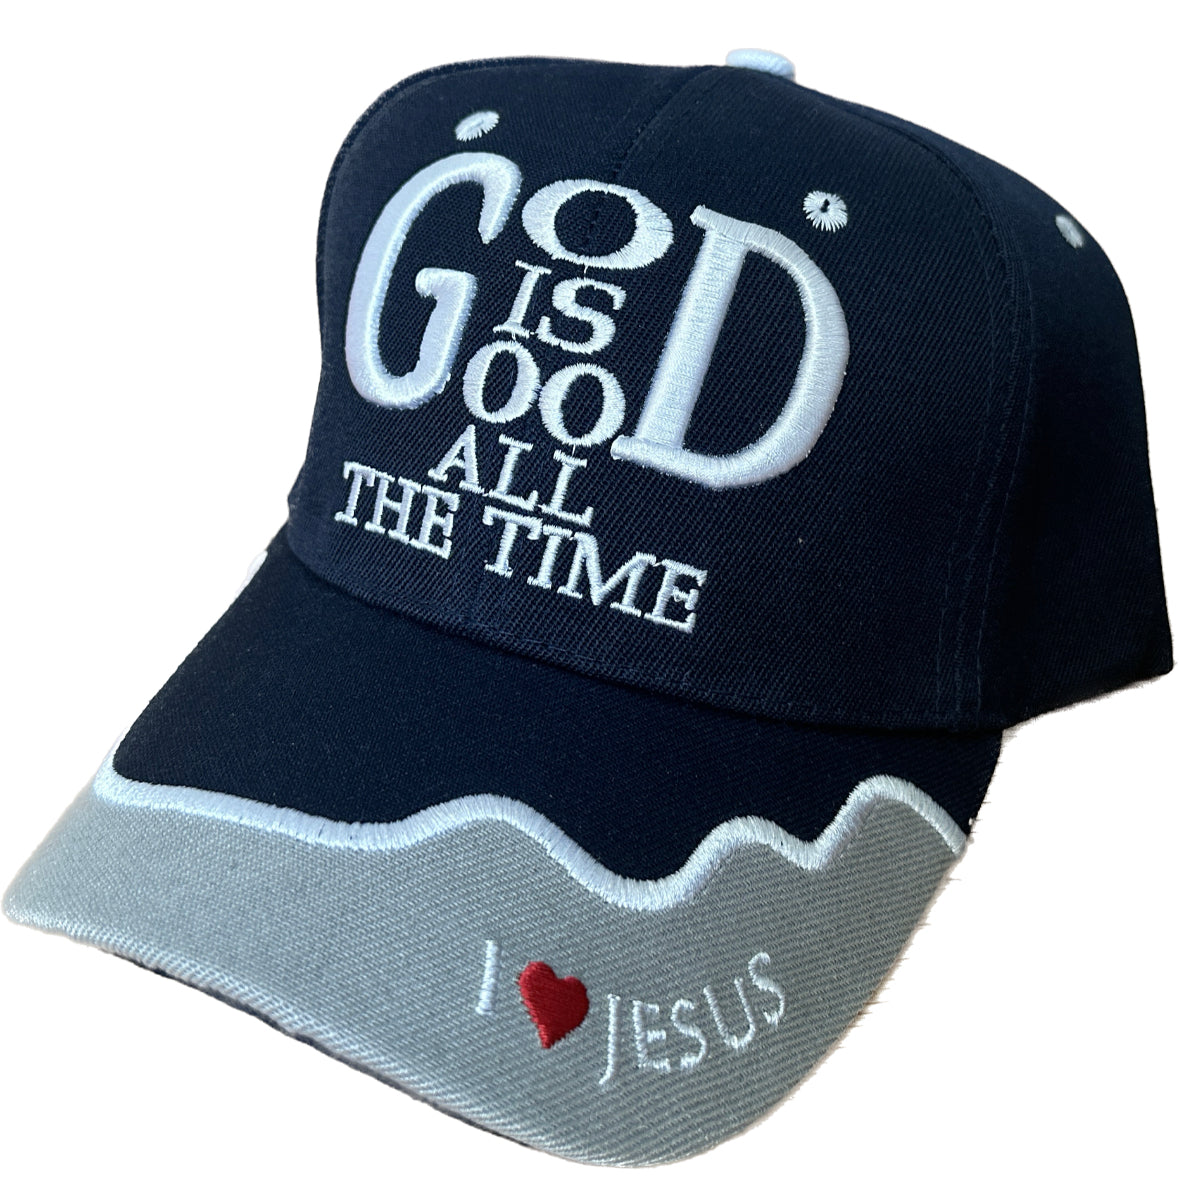 God is Good Hat